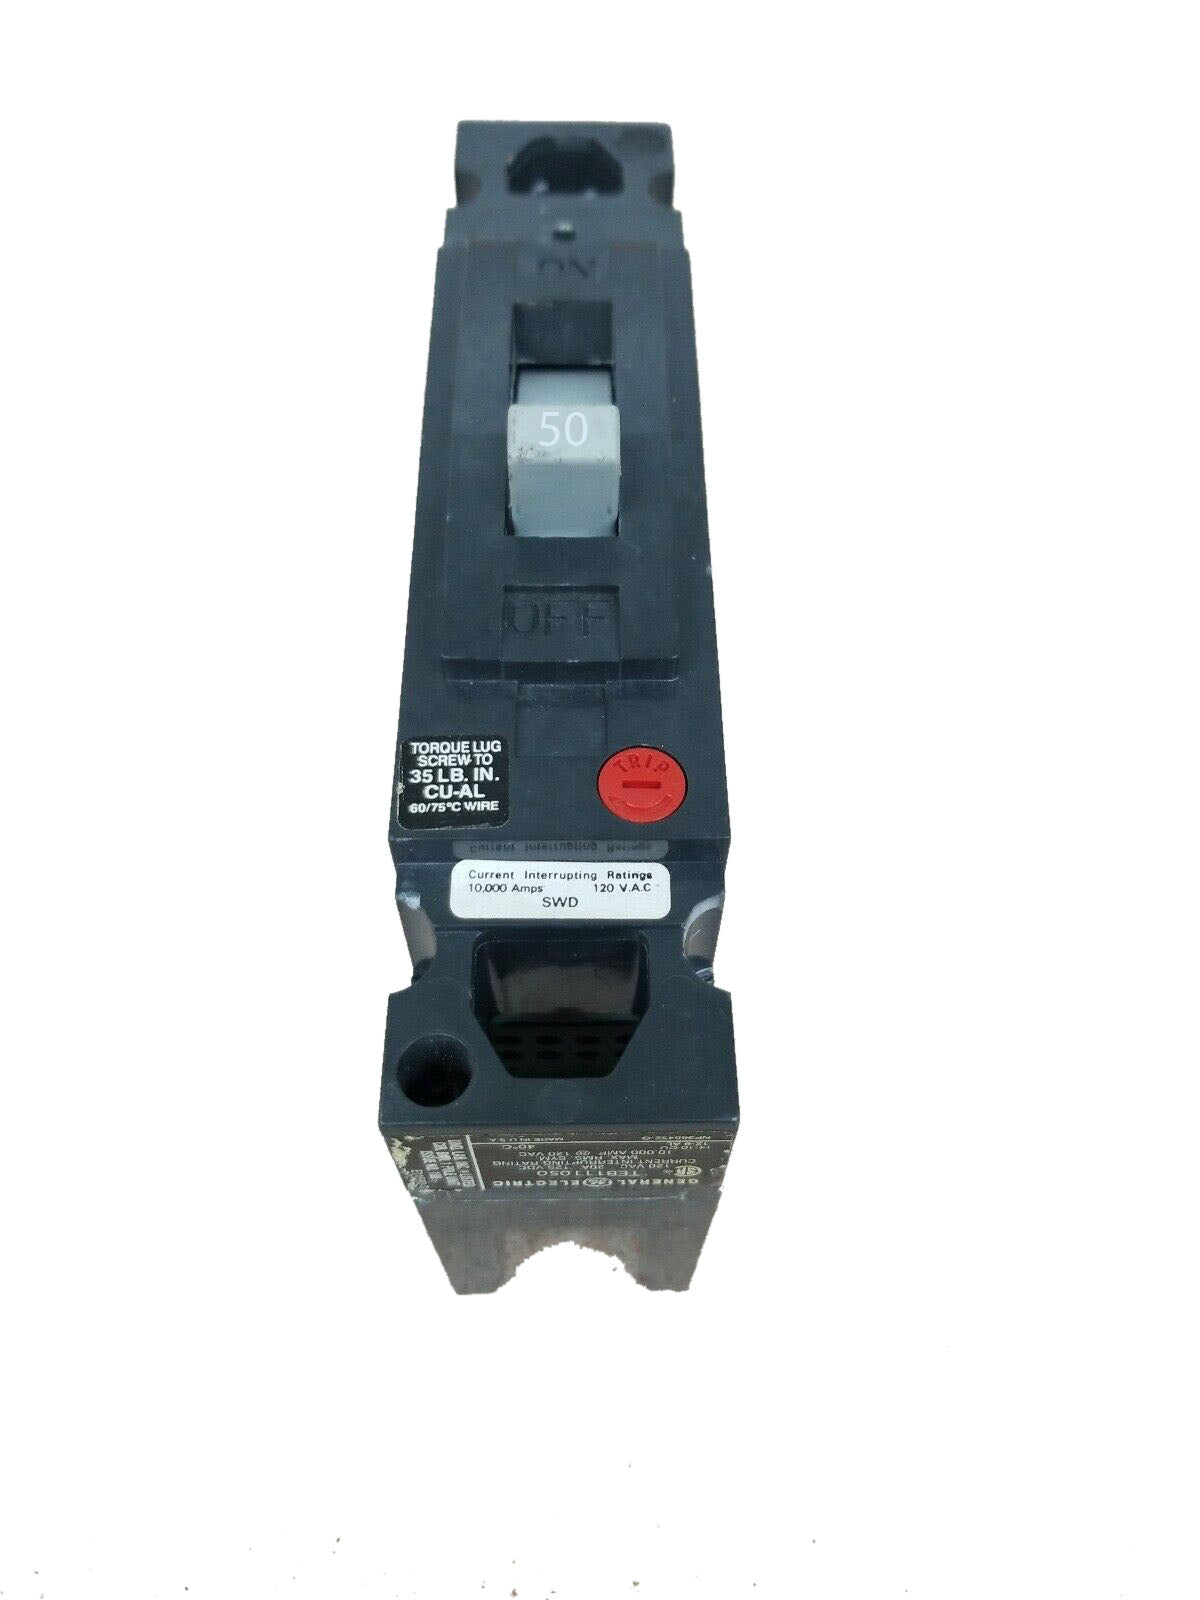 TEB111050 - GE -  Molded Case Circuit Breaker